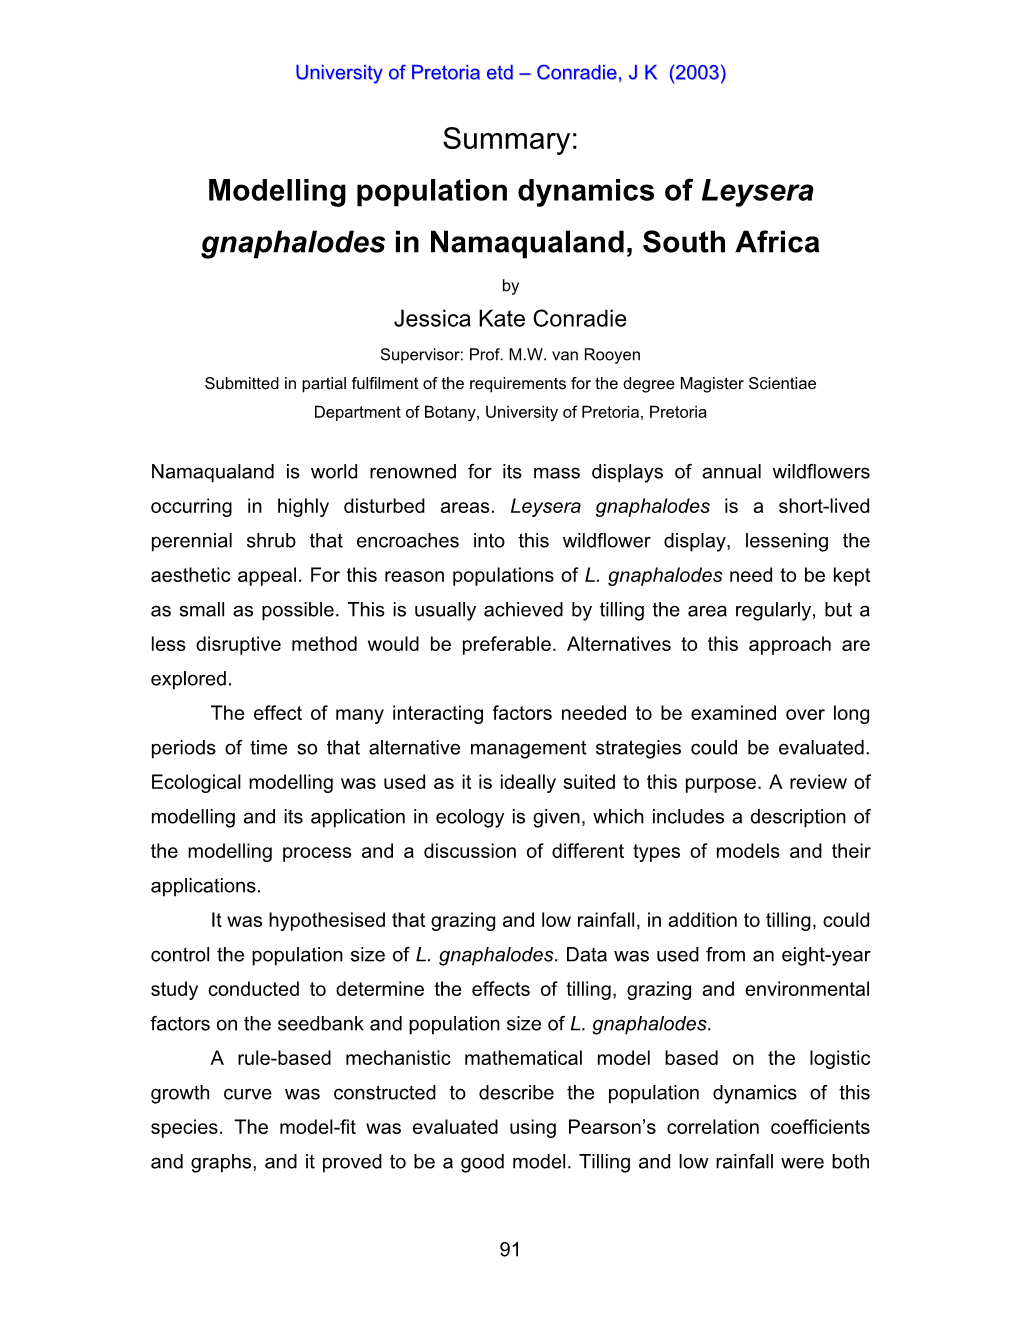 Modelling Population Dynamics of Leysera Gnaphalodes in Namaqualand, South Africa